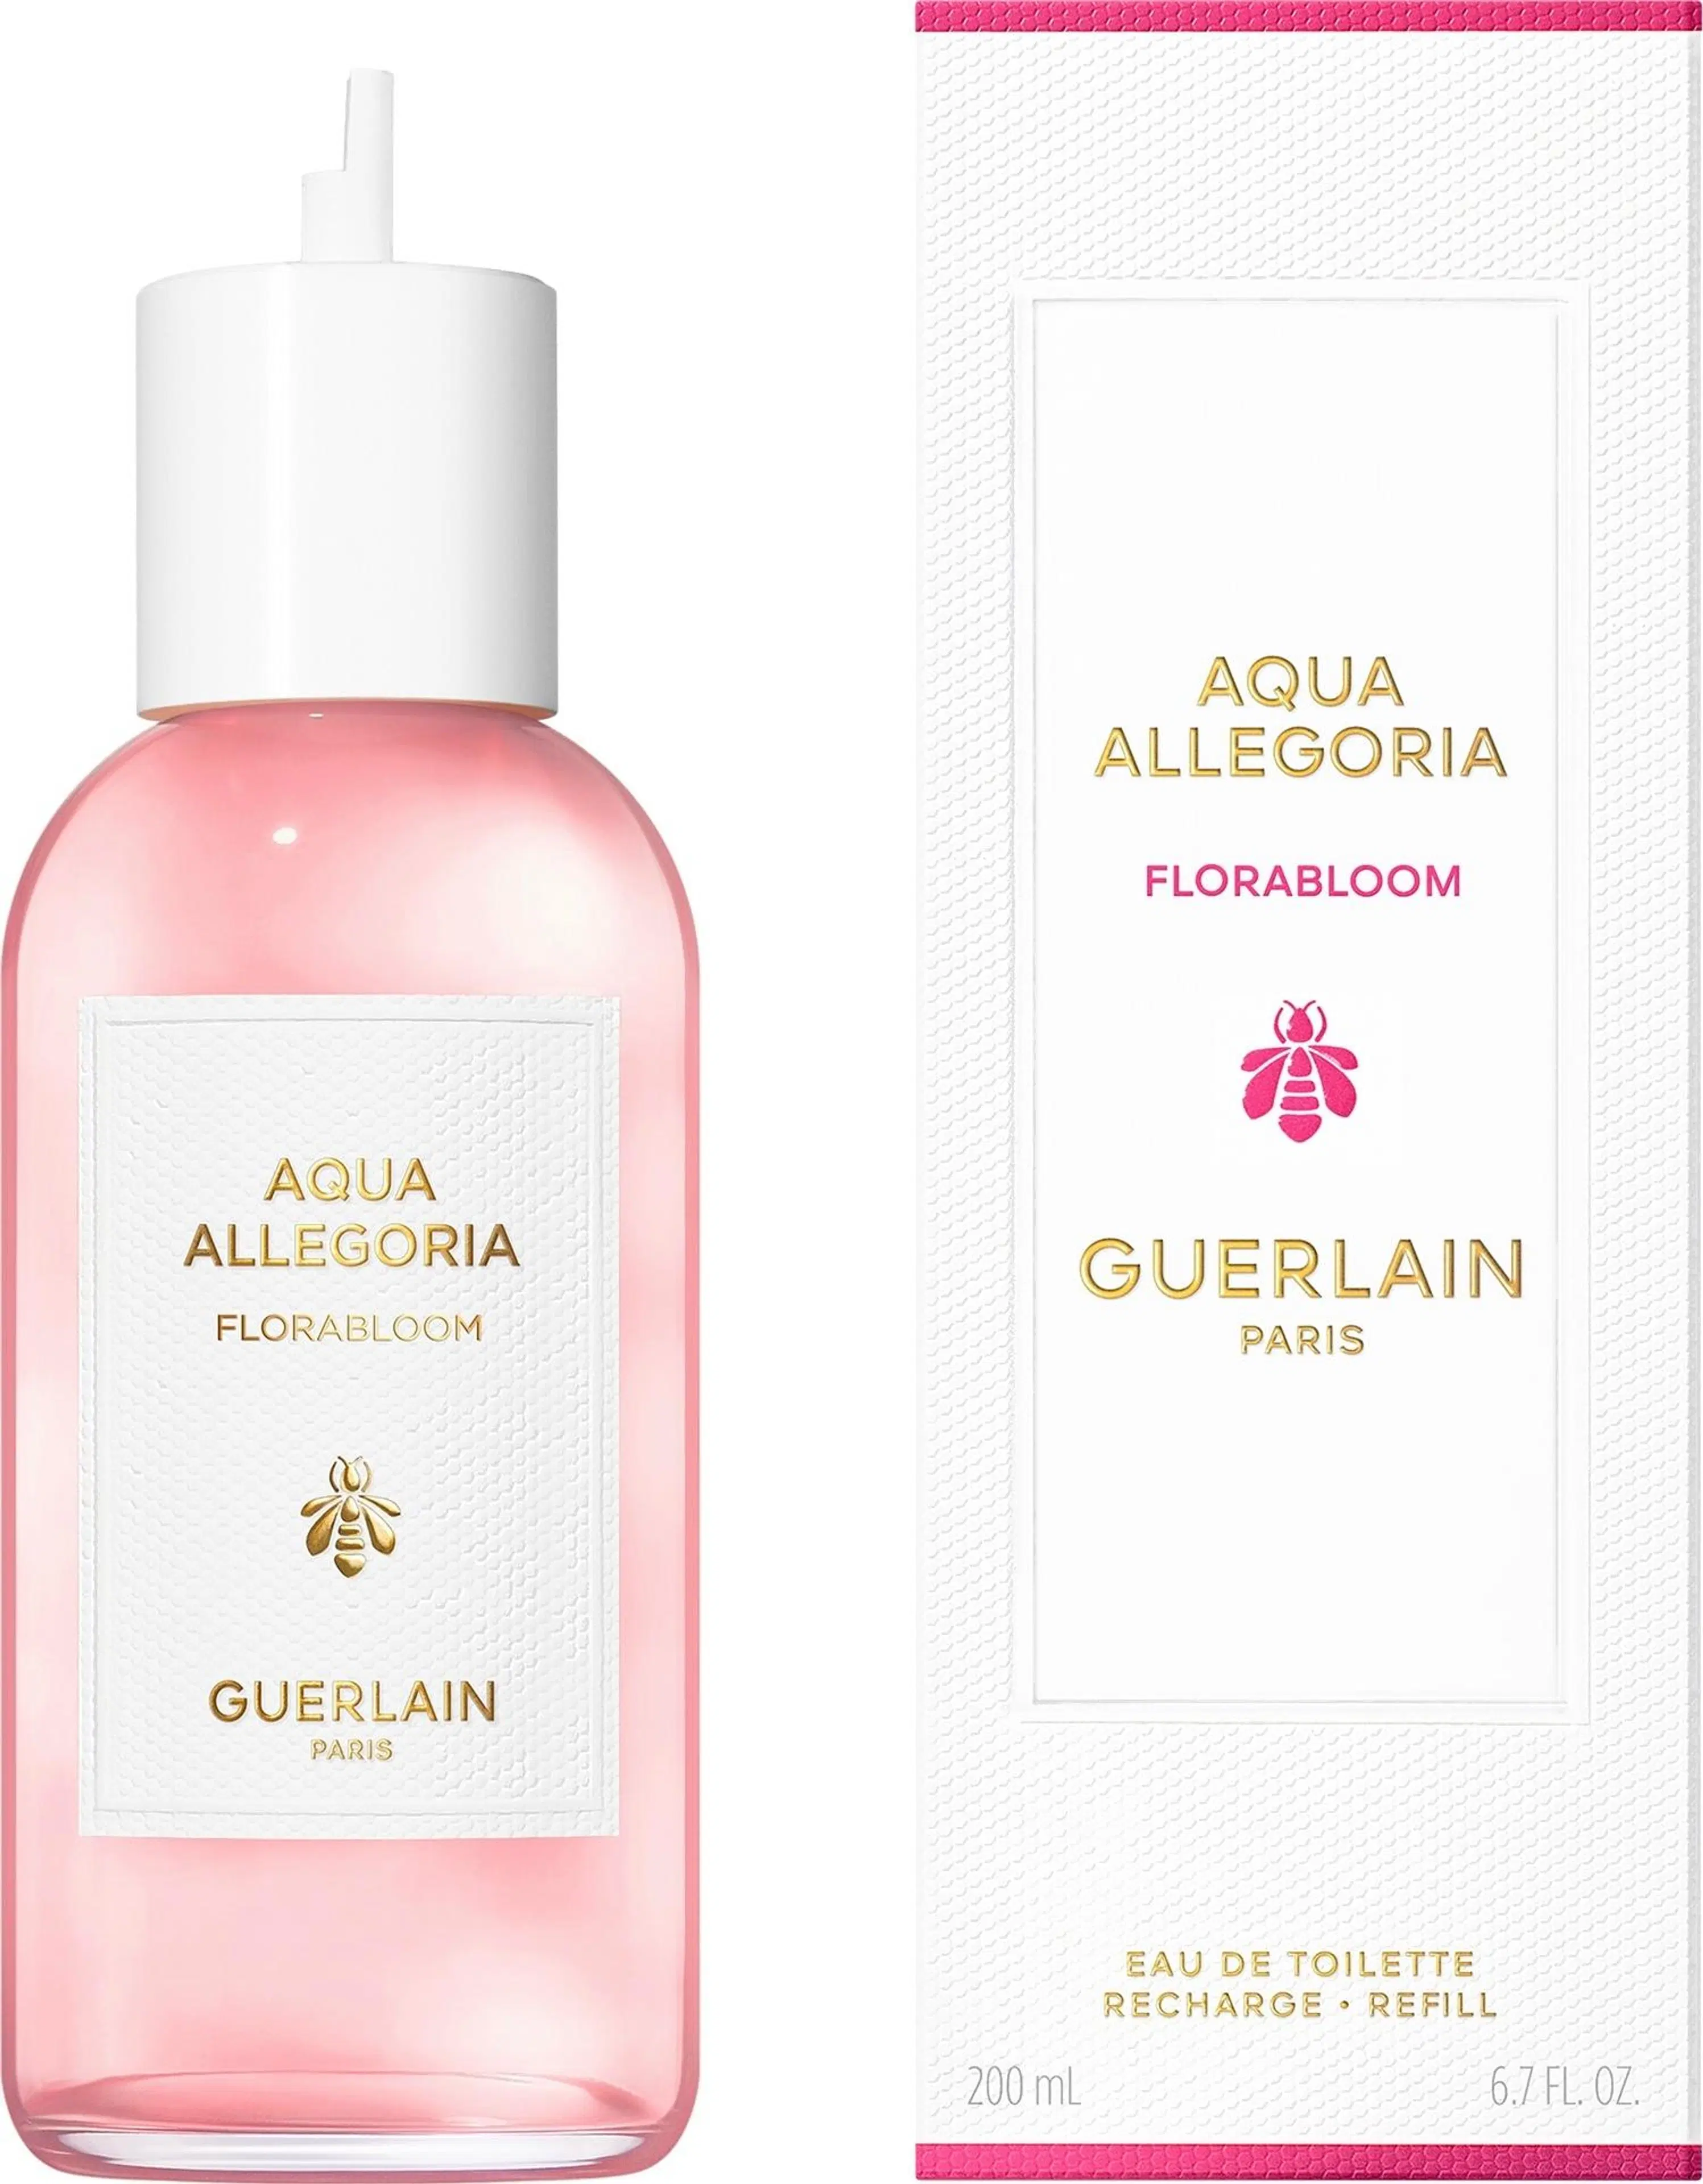 Guerlain Aqua Allegoria Florabloom Eau de Toilette 200 ml Refill